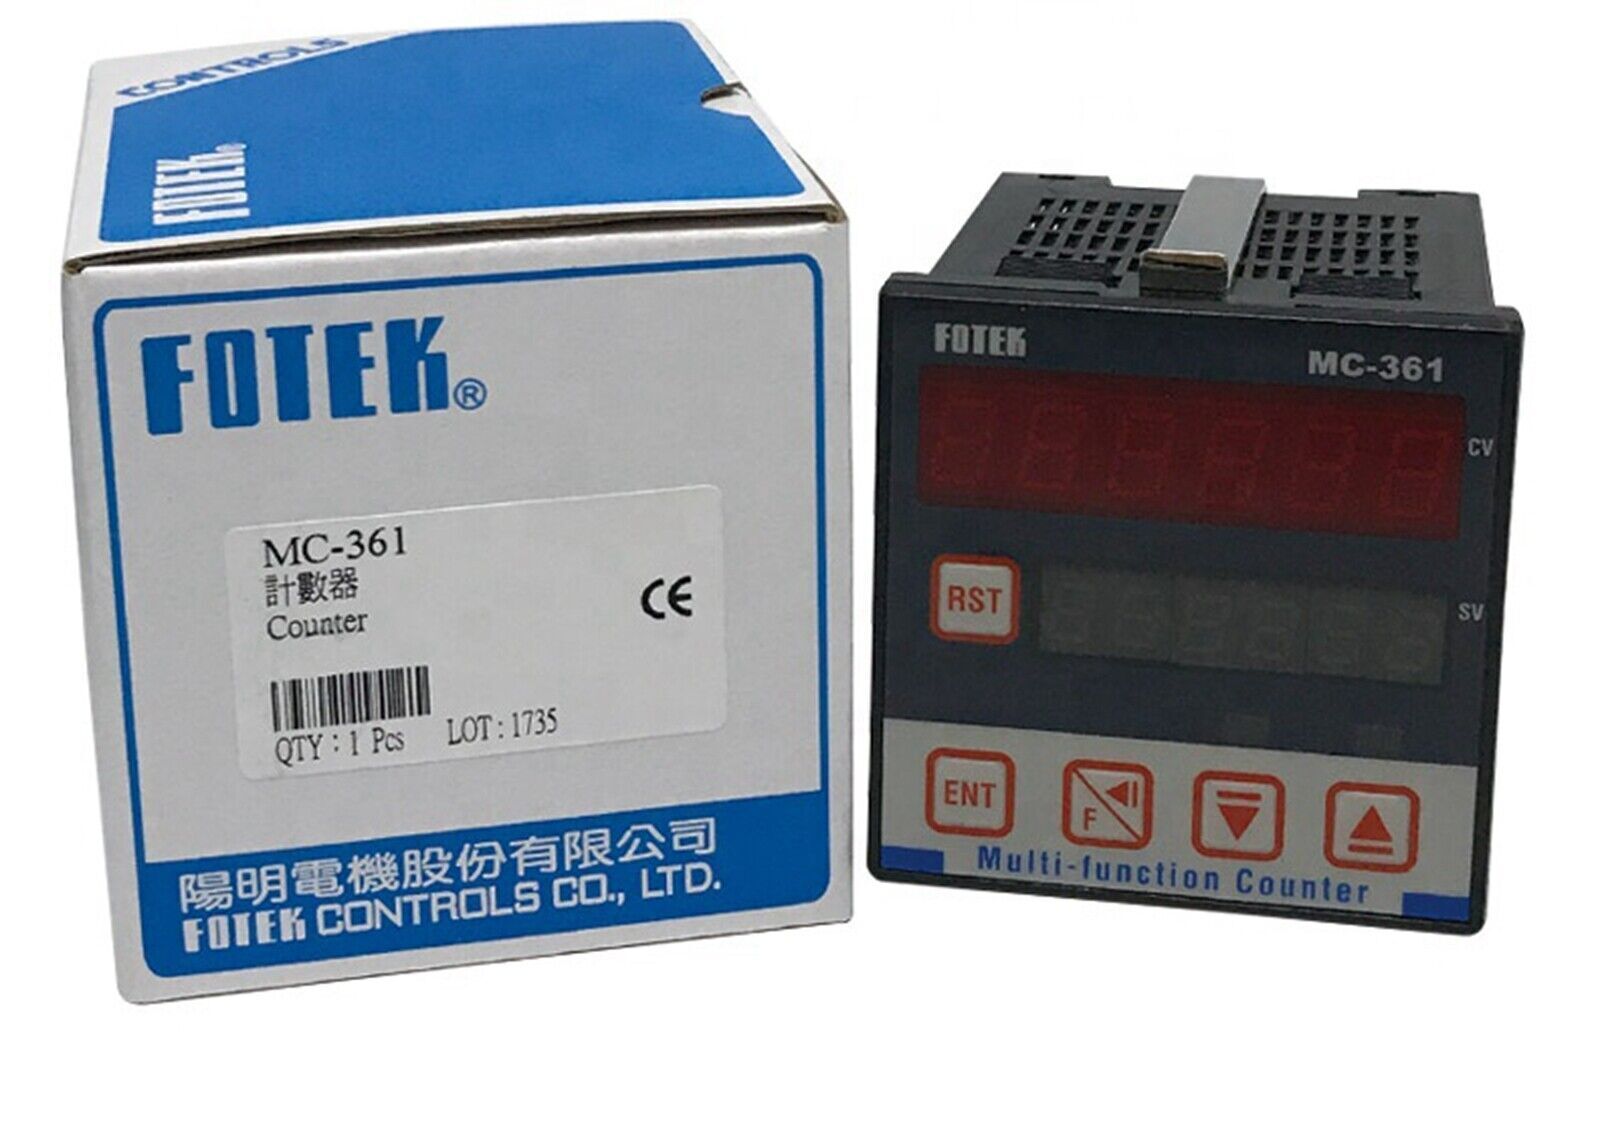 FOTEK MC361 MC-361 Counter